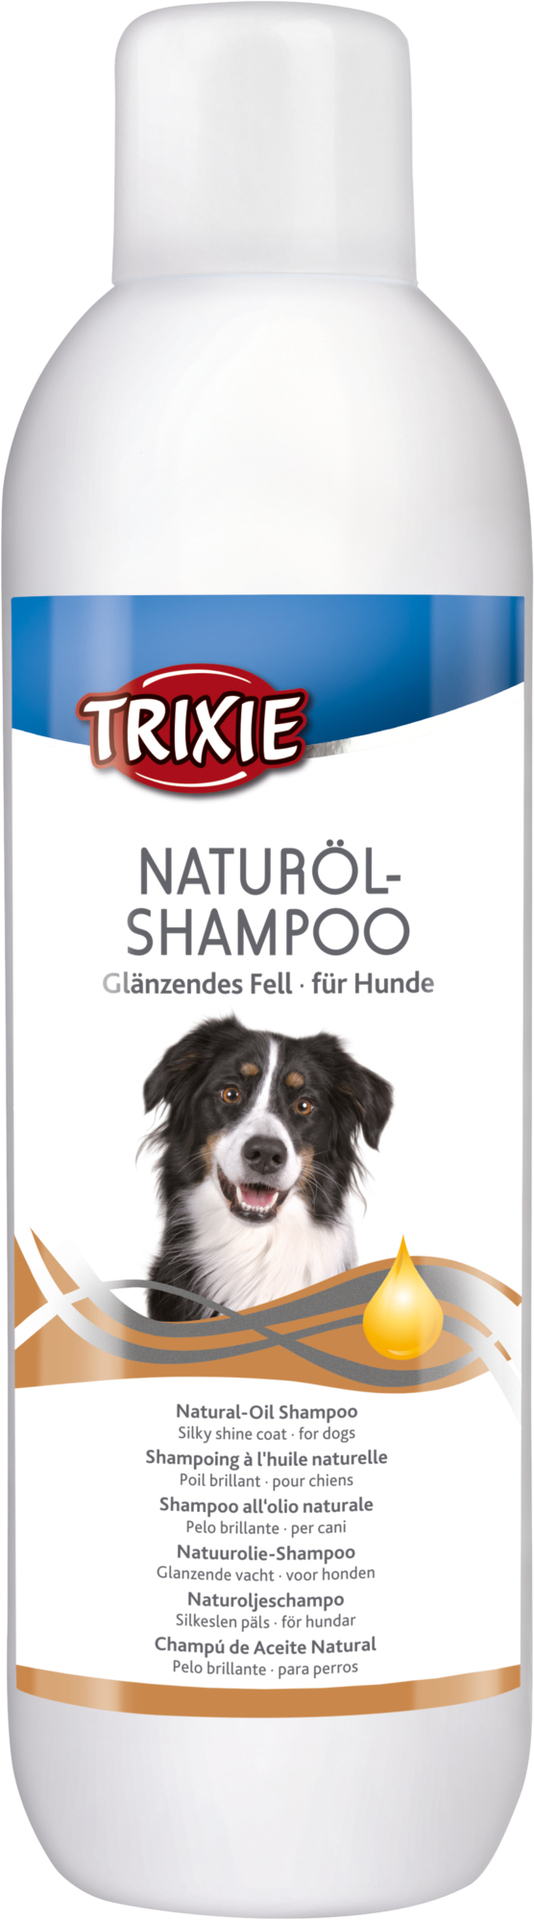 TRIXIE Naturöl-Shampoo